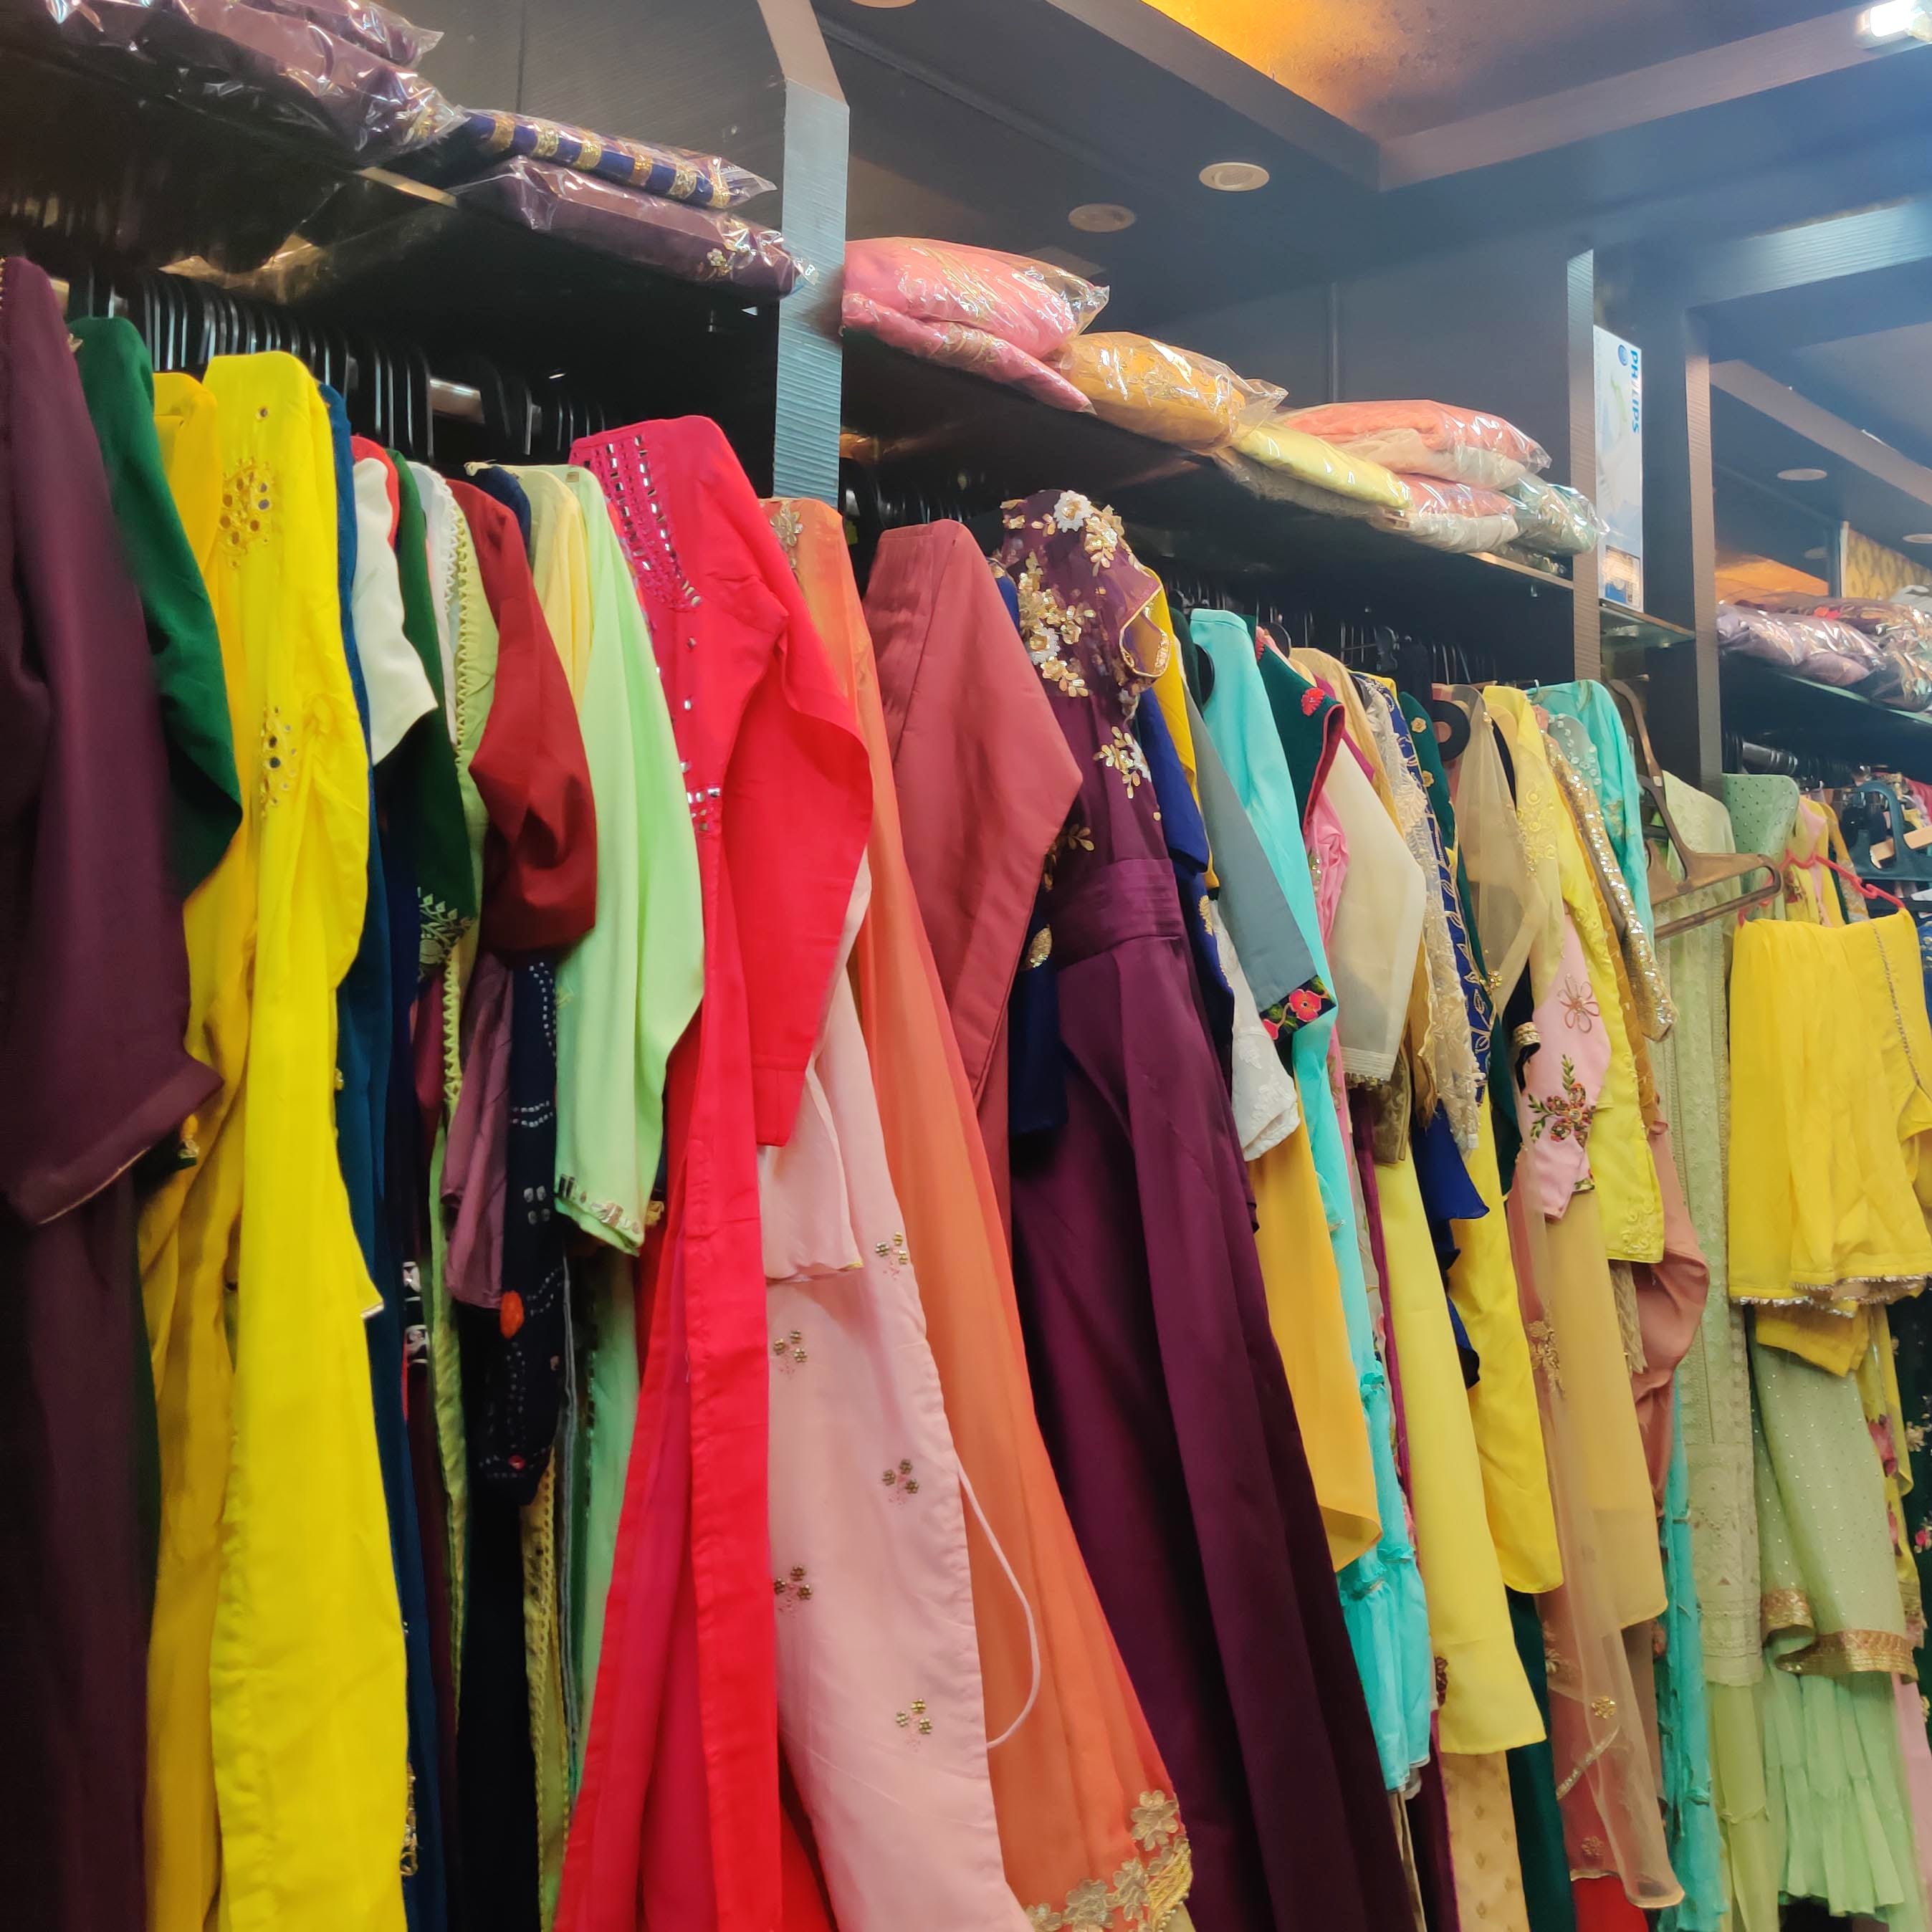 Boutique,Clothing,Clothes hanger,Room,Outerwear,Outlet store,Textile,Retail,Bazaar,Closet